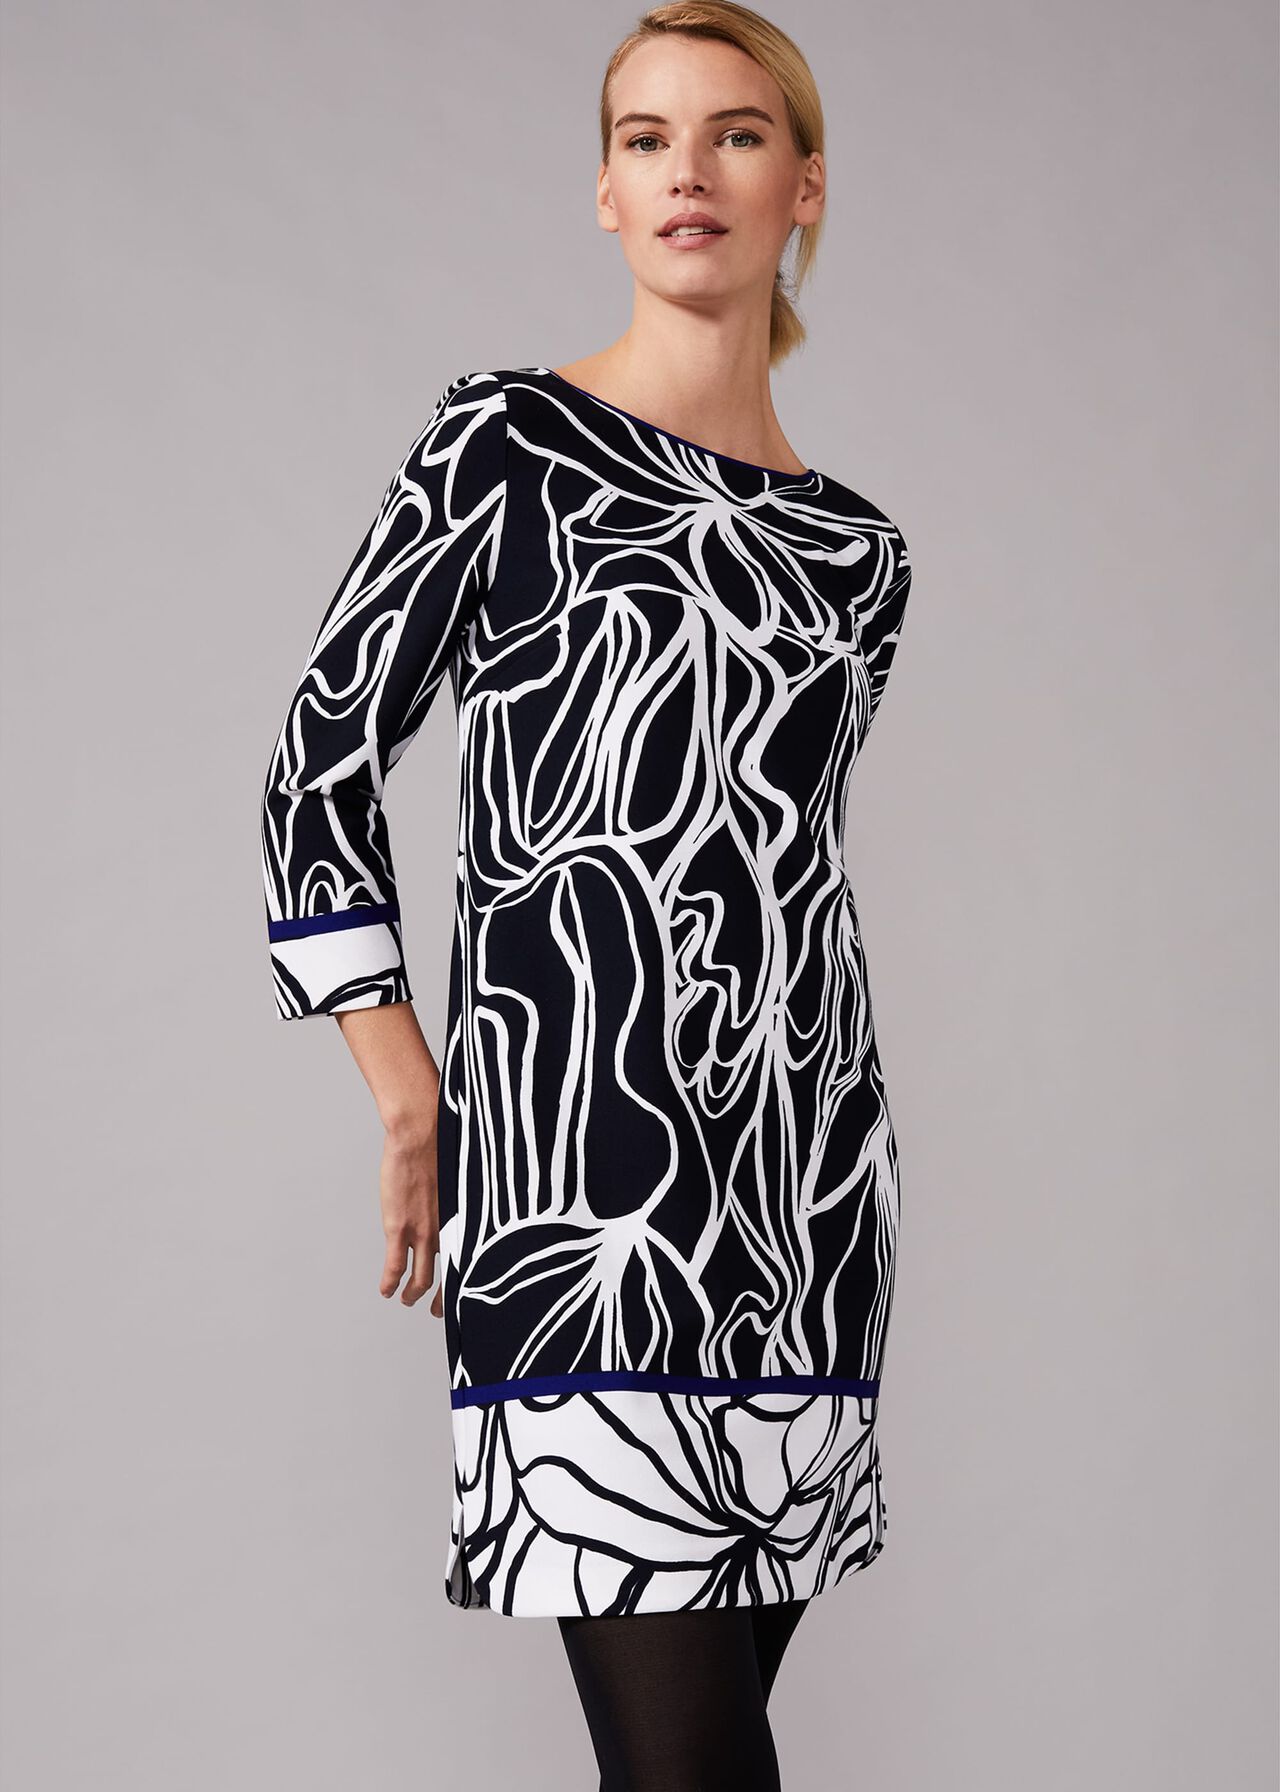 Shisui Linear Print Dress